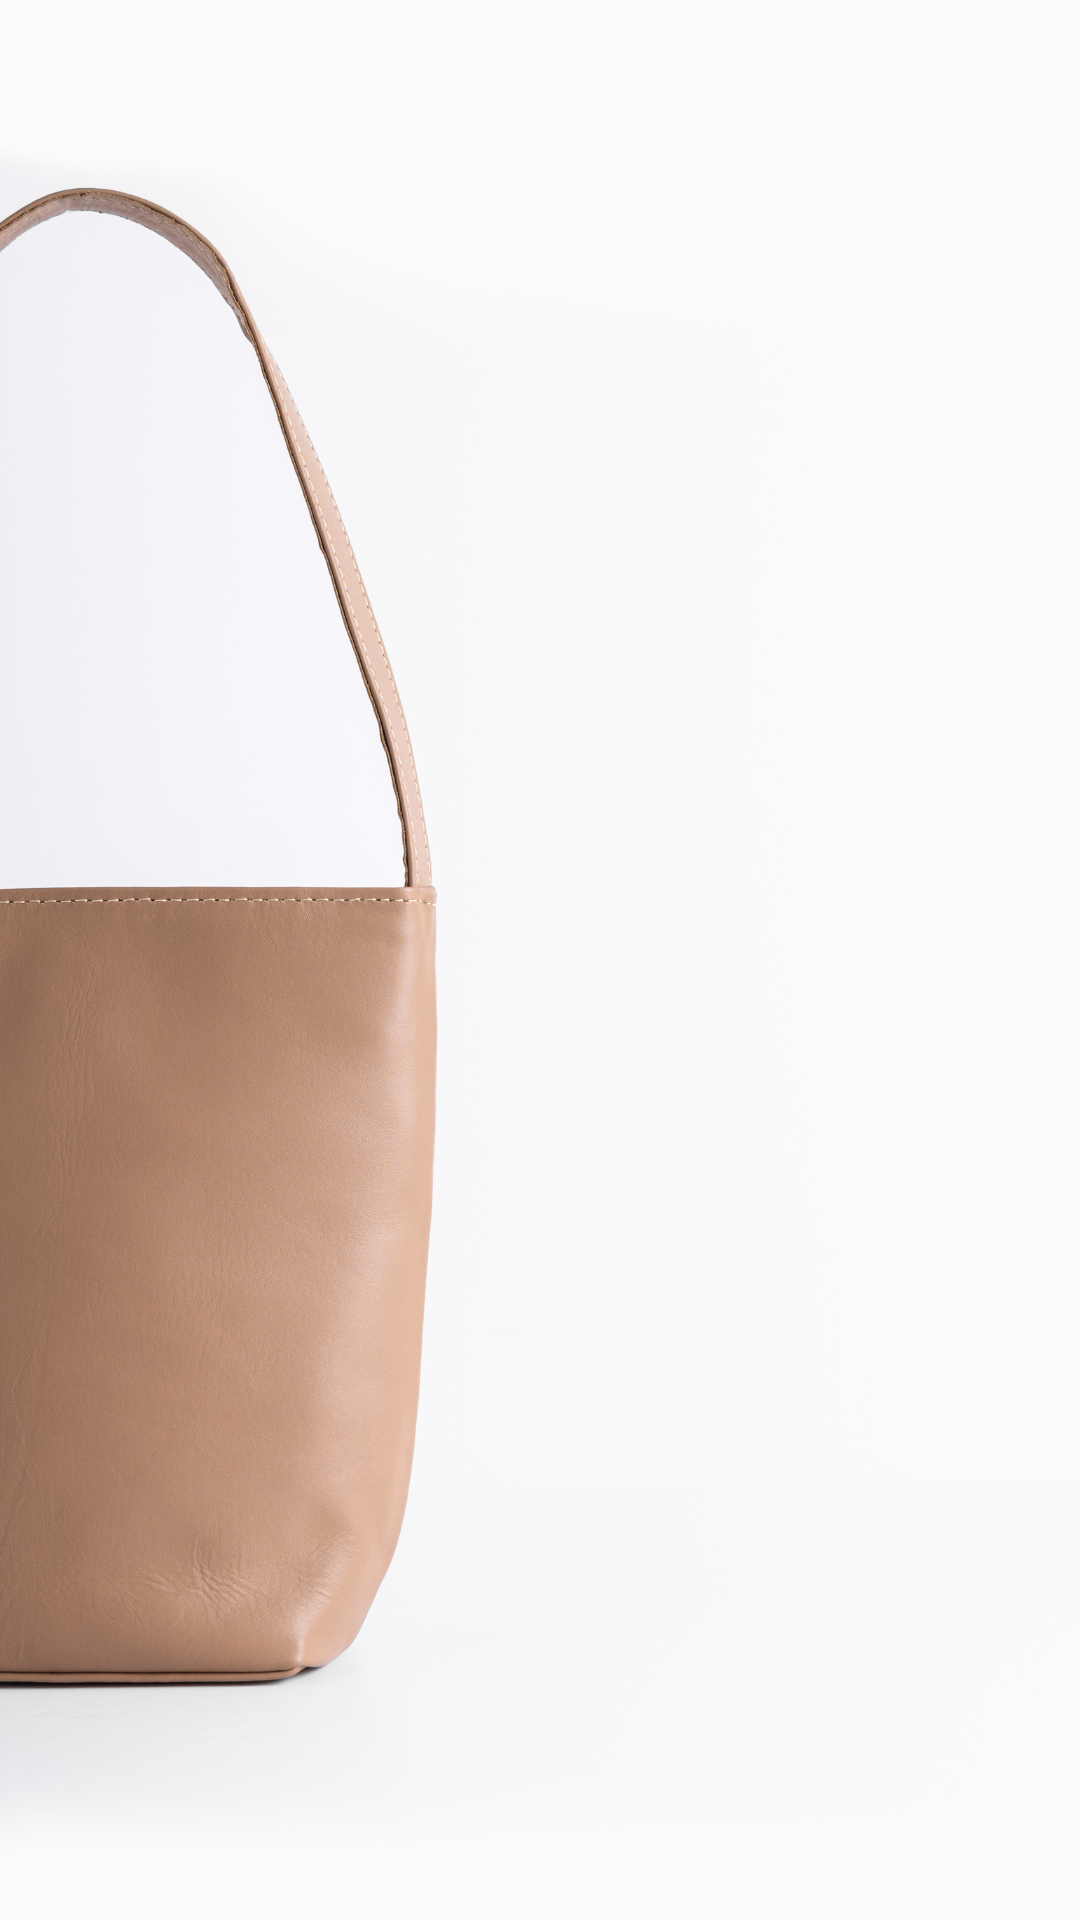 Nude Embroidered Bucket Bag